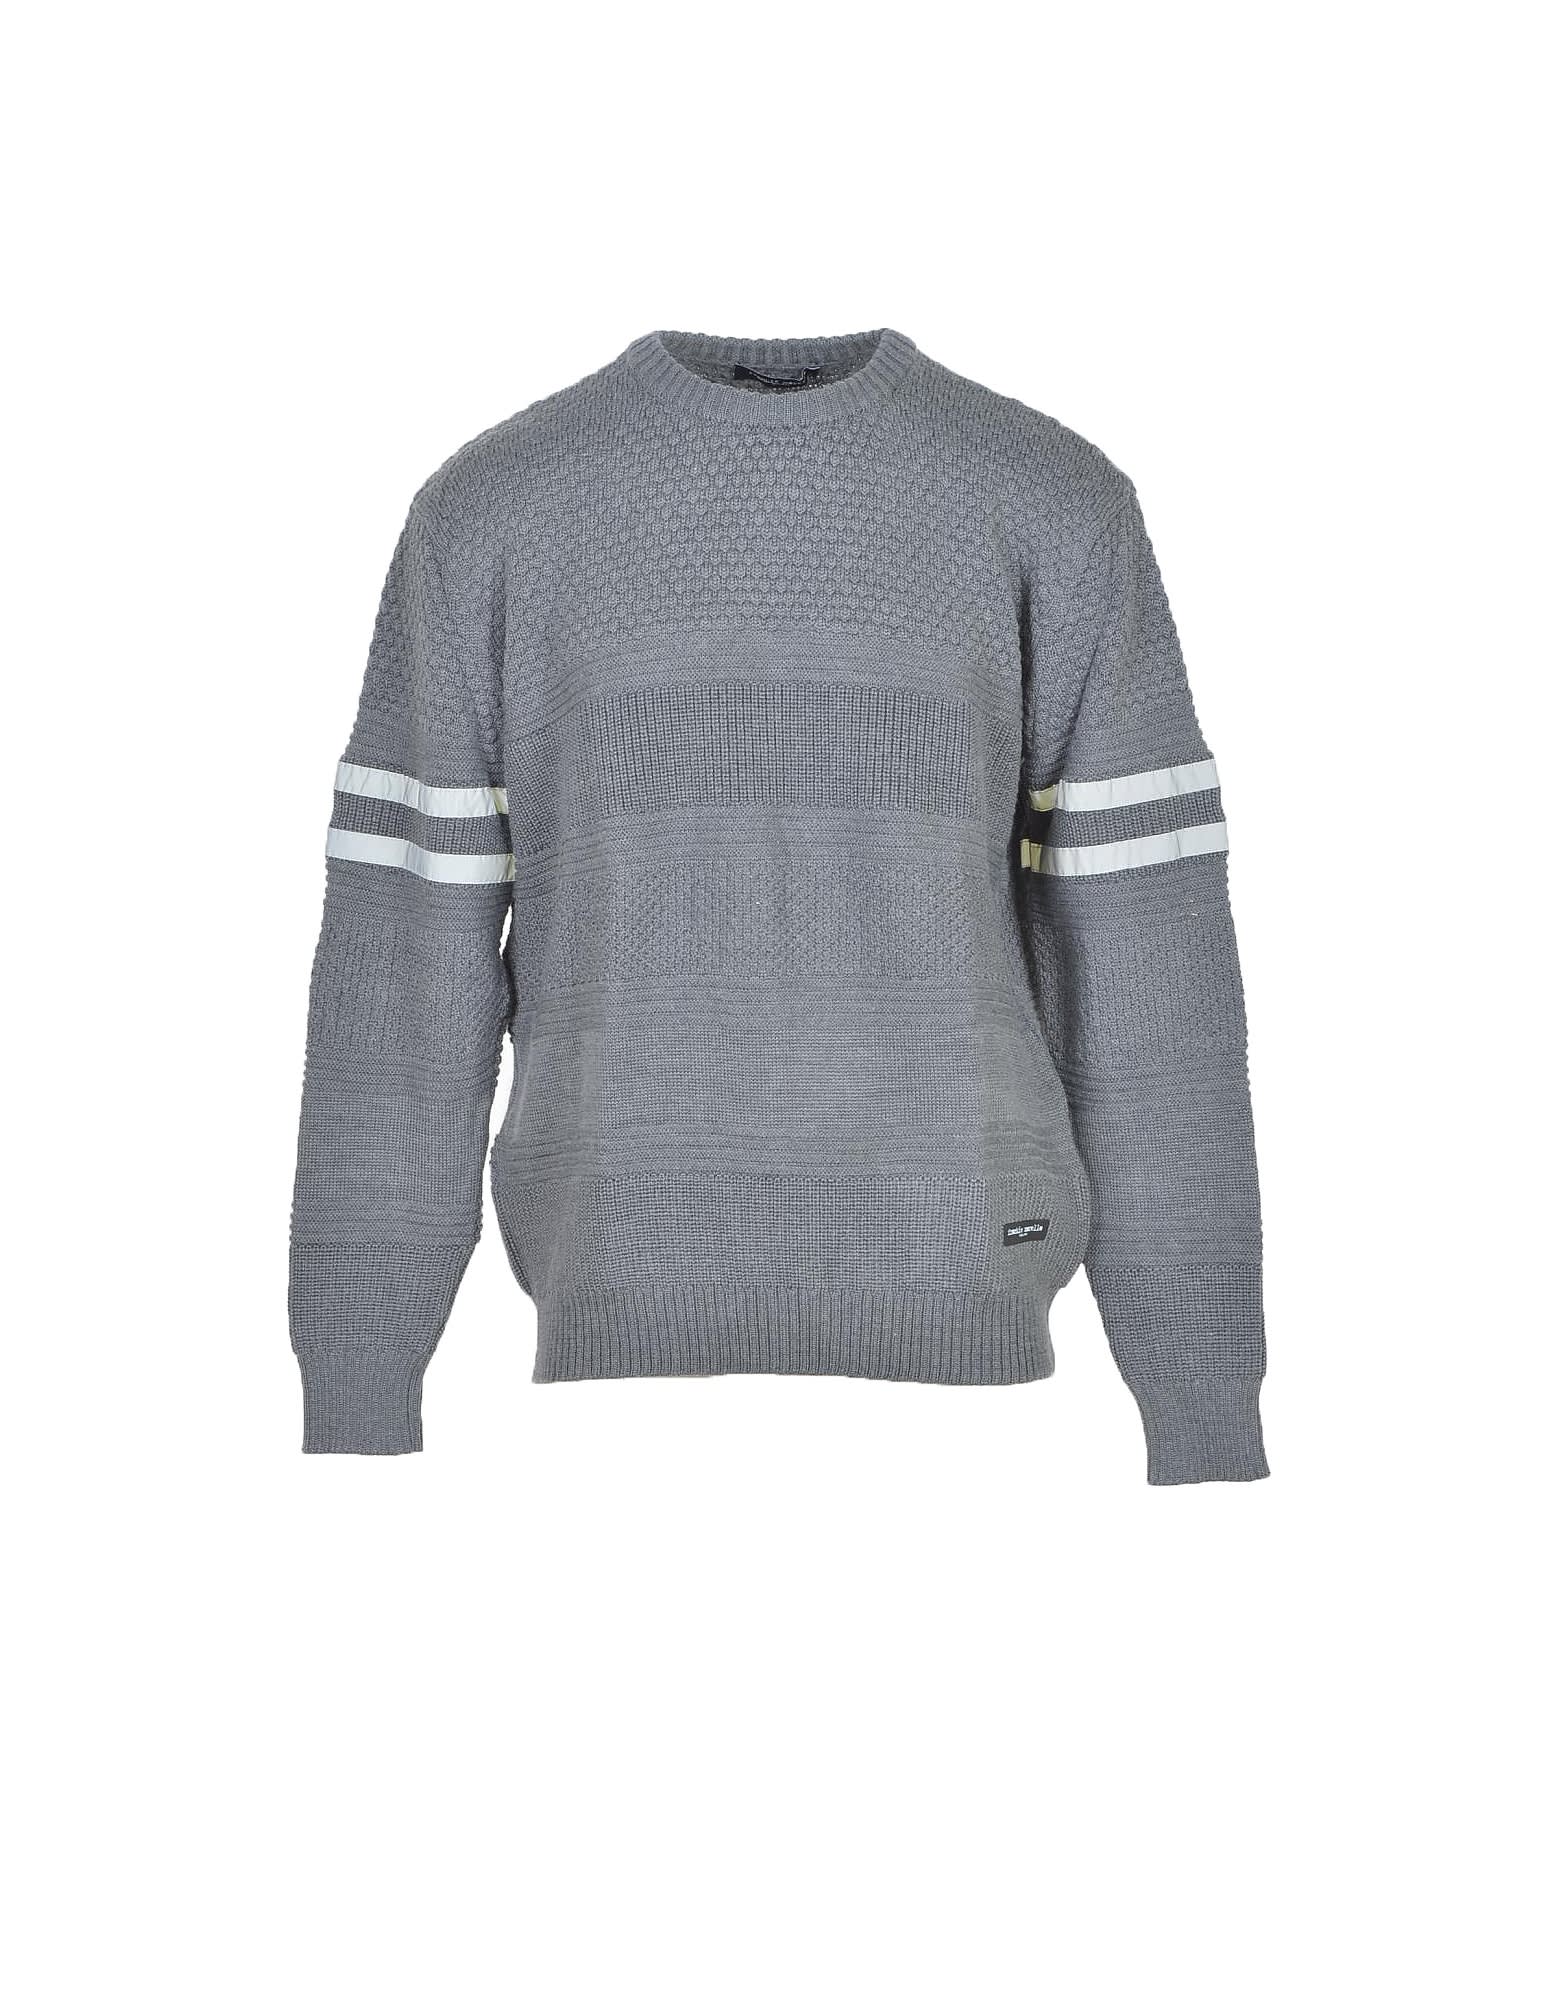 Frankie Morello Mens Gray Sweater